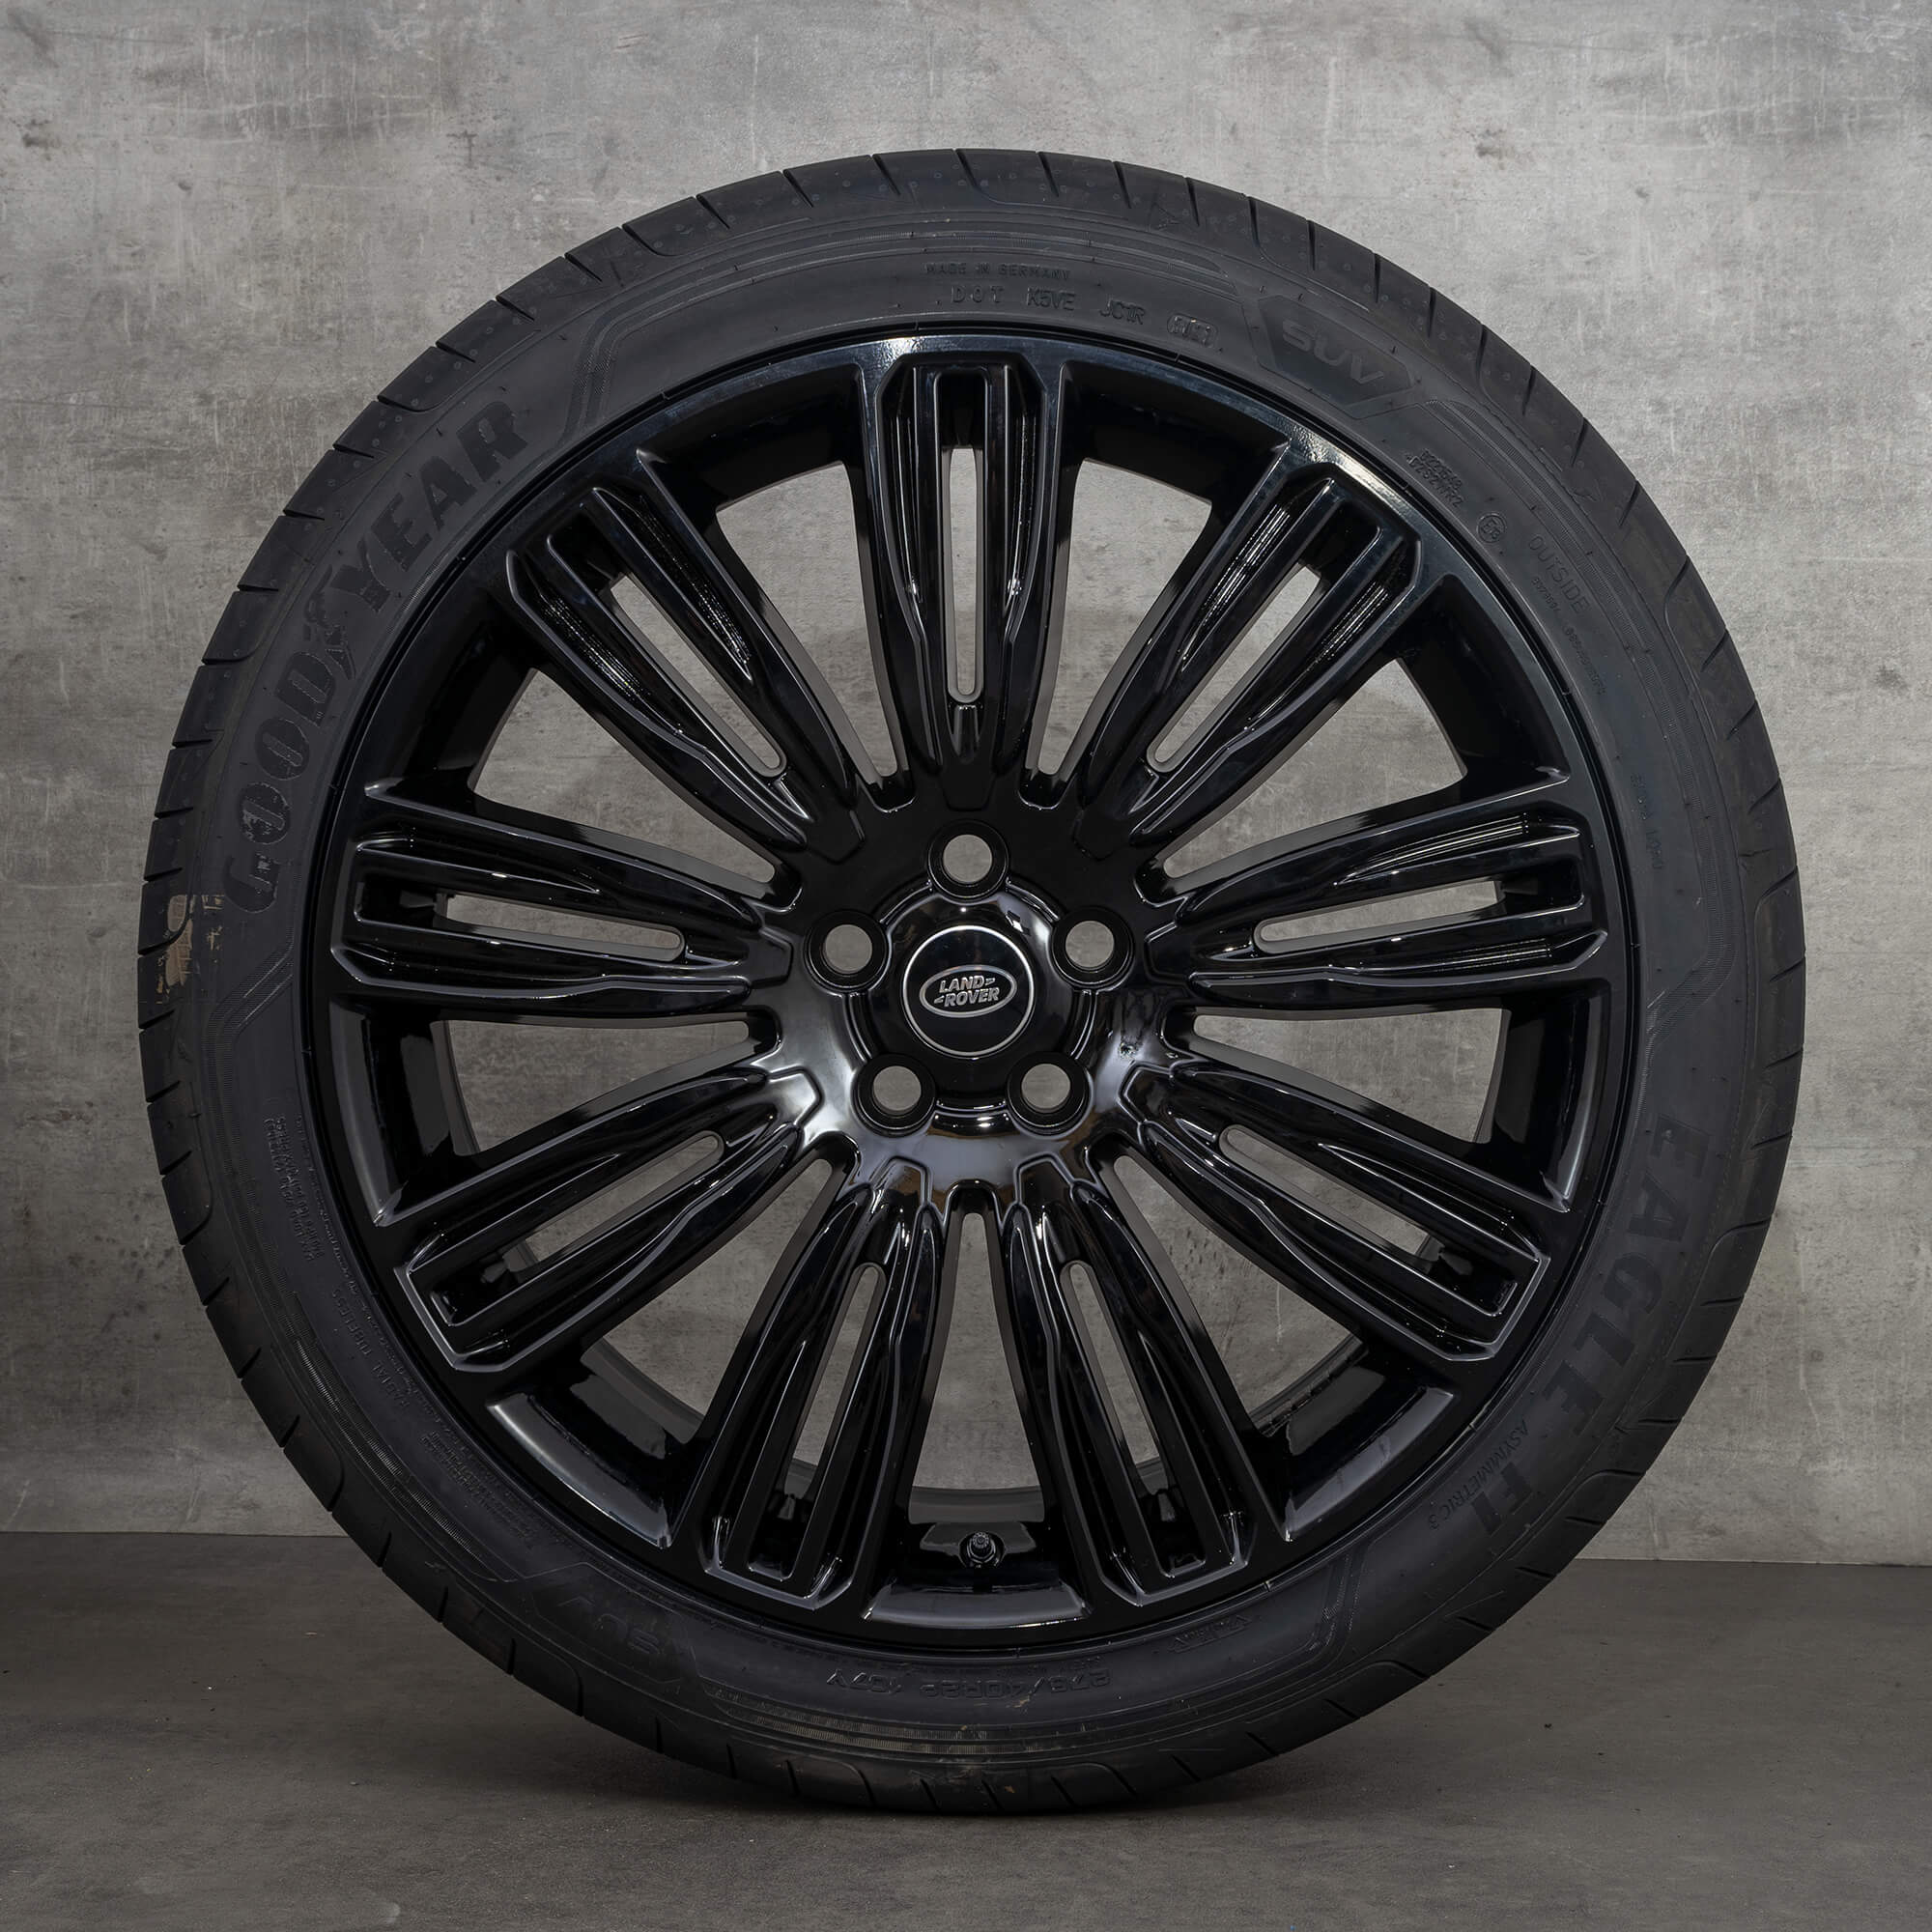 Land Range Rover 22 inch rims 9012 alloy summer tires wheels NEW